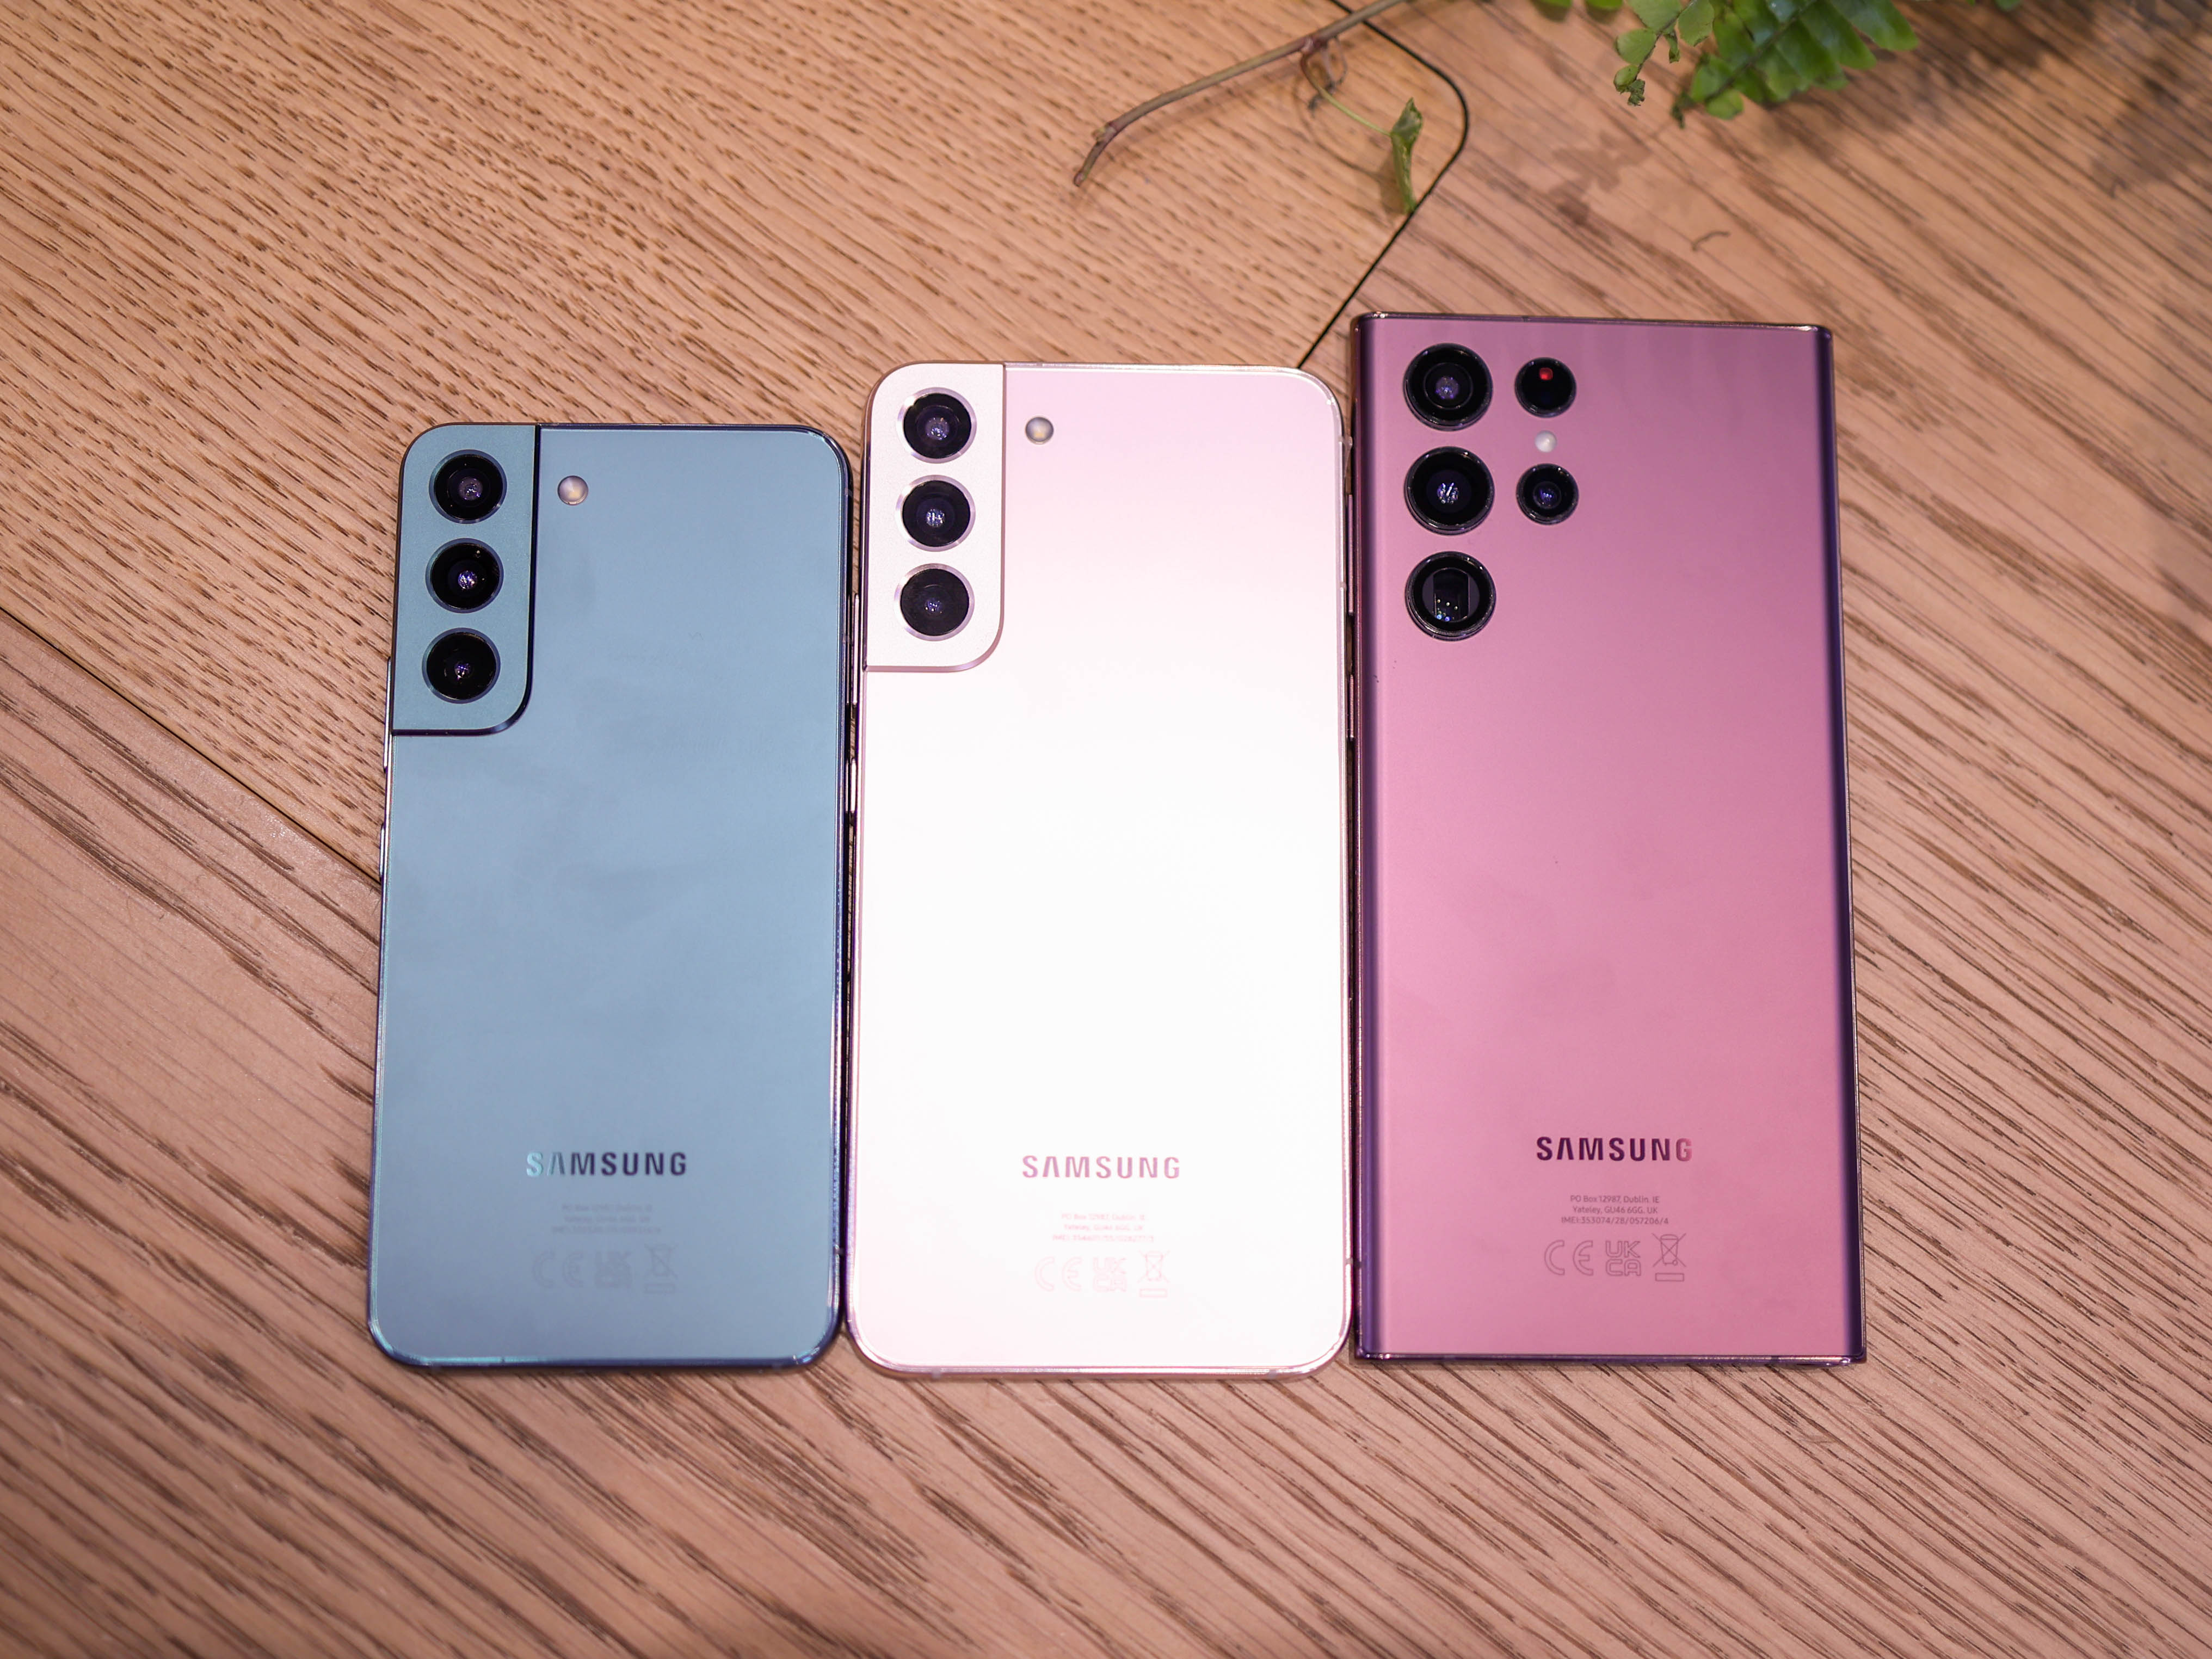 Samsung Galaxy S22 Ultra vs S21 Ultra: Note-worthy Upgrade?